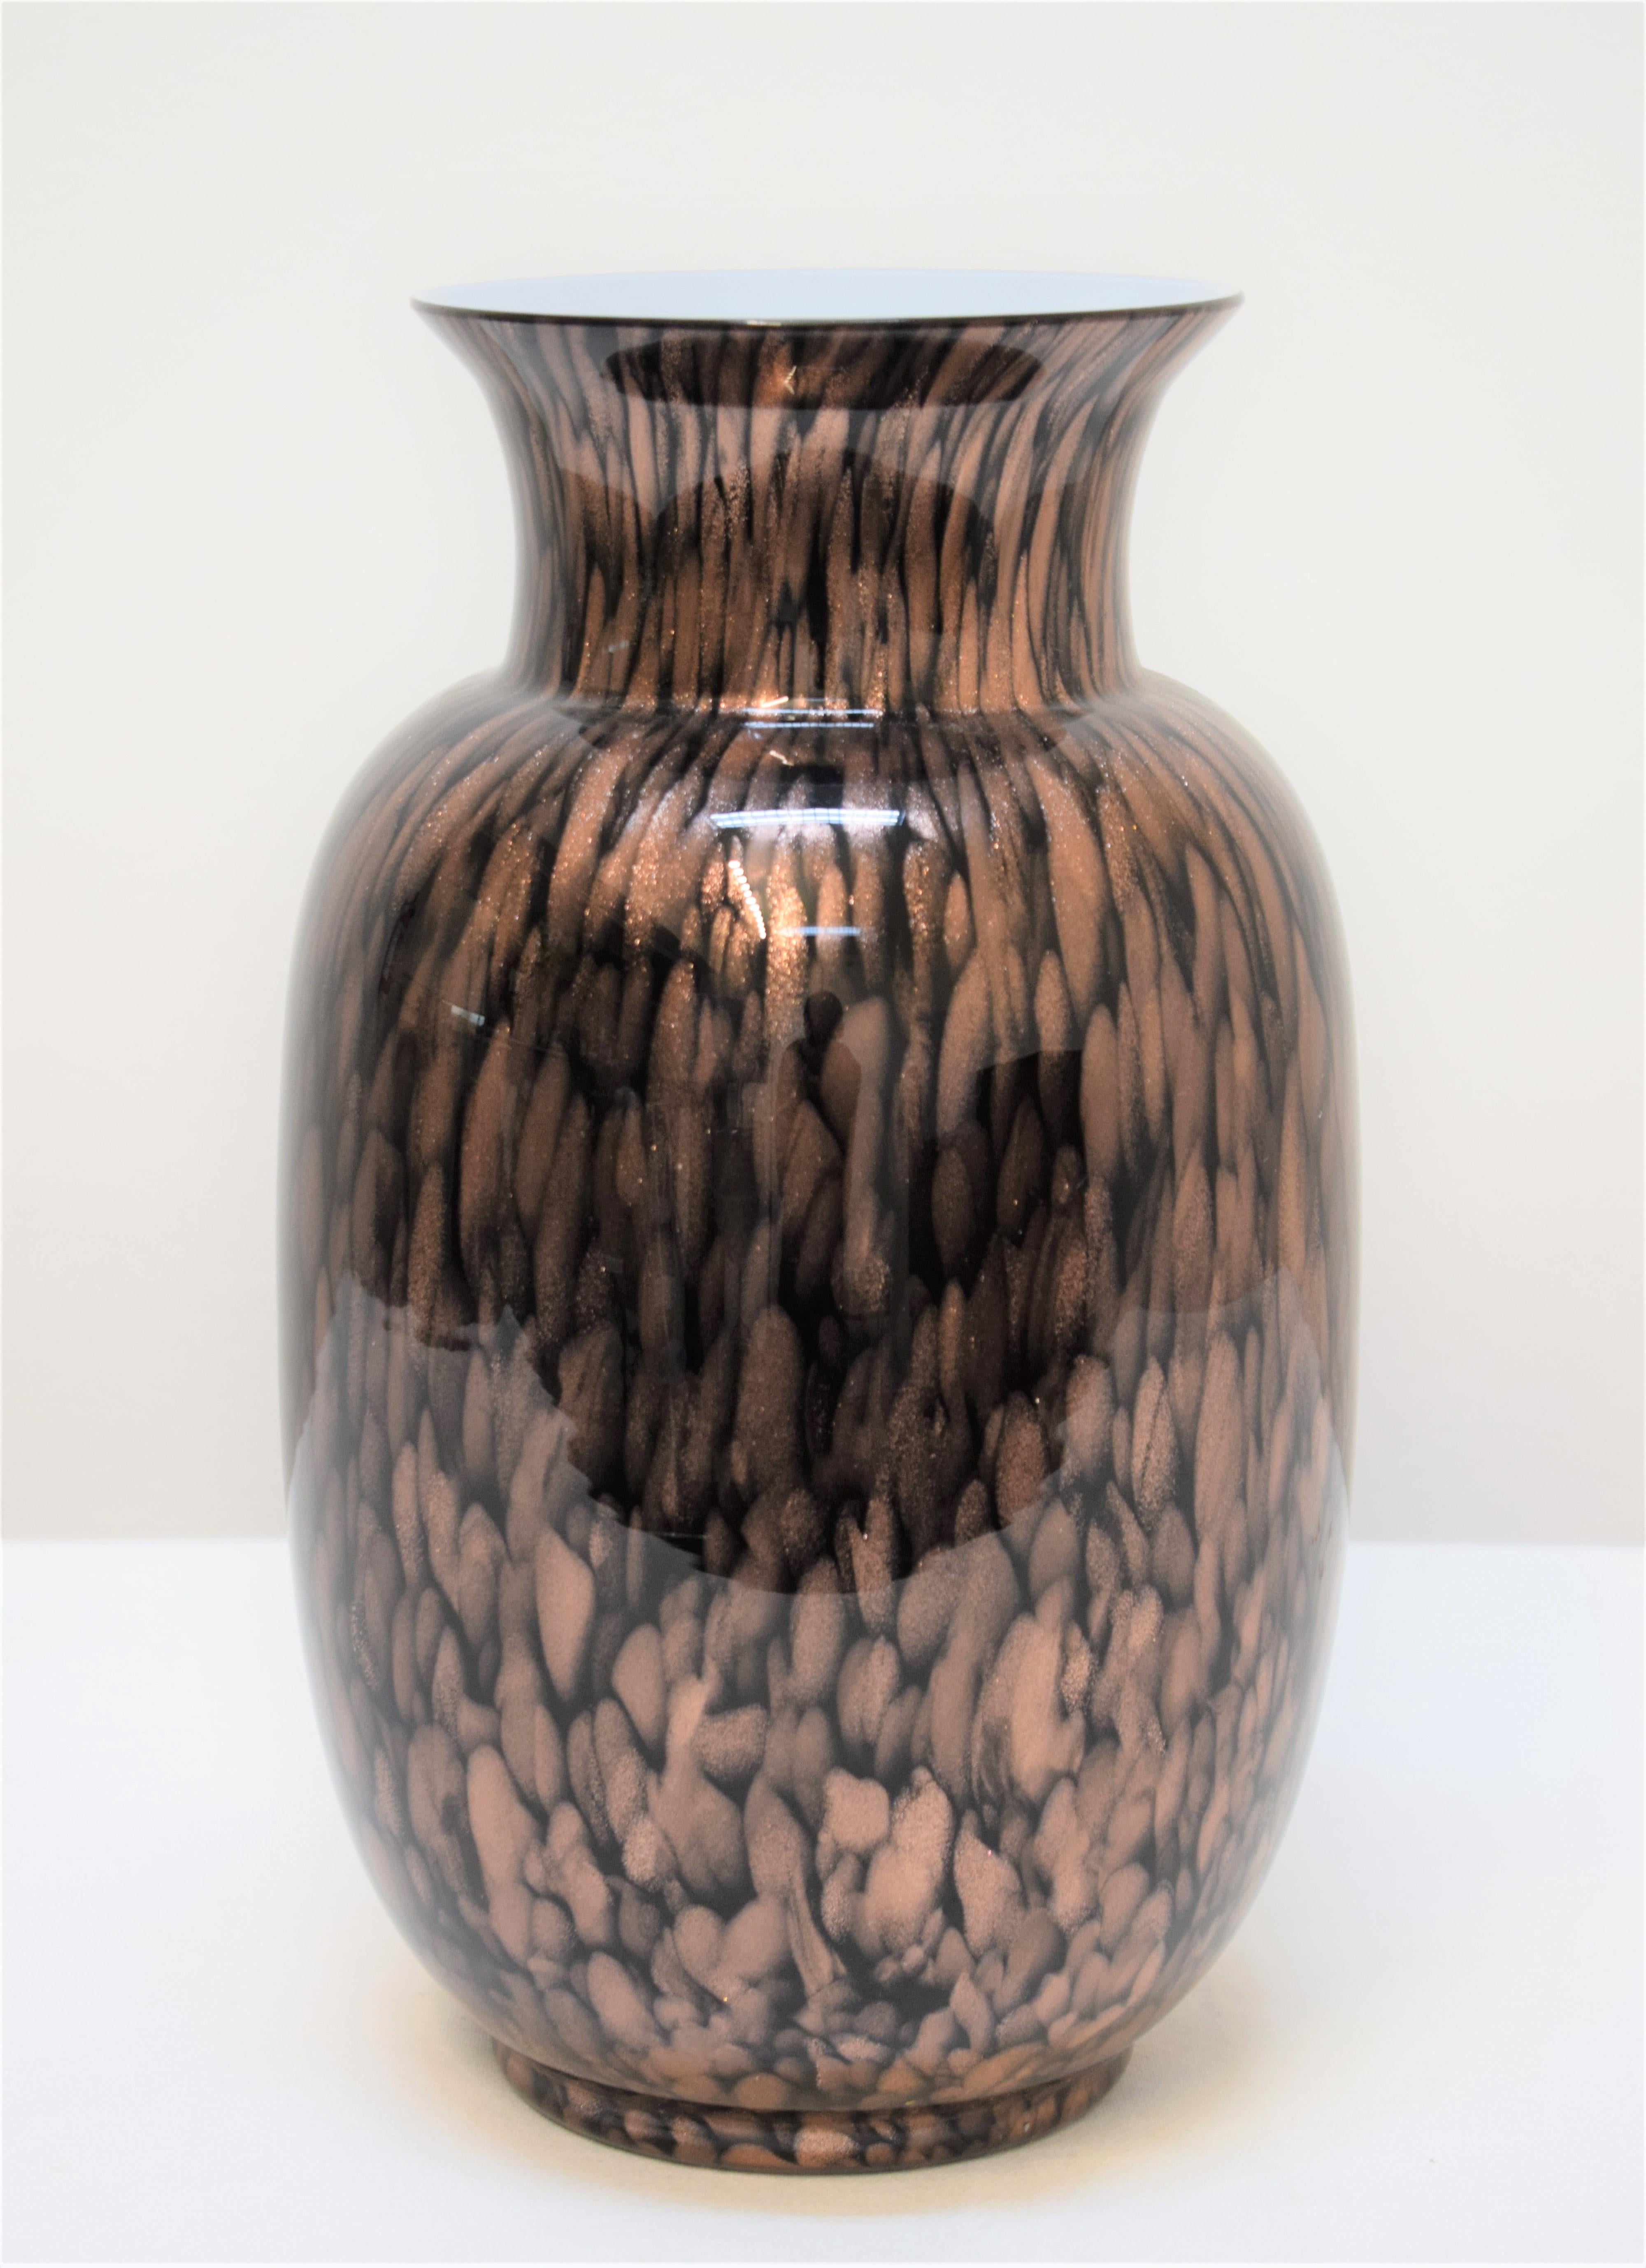 Speckled glass vase by VeArt Venezia, 1970s.
Dimensions: H= 35 cm; D= 22 cm.